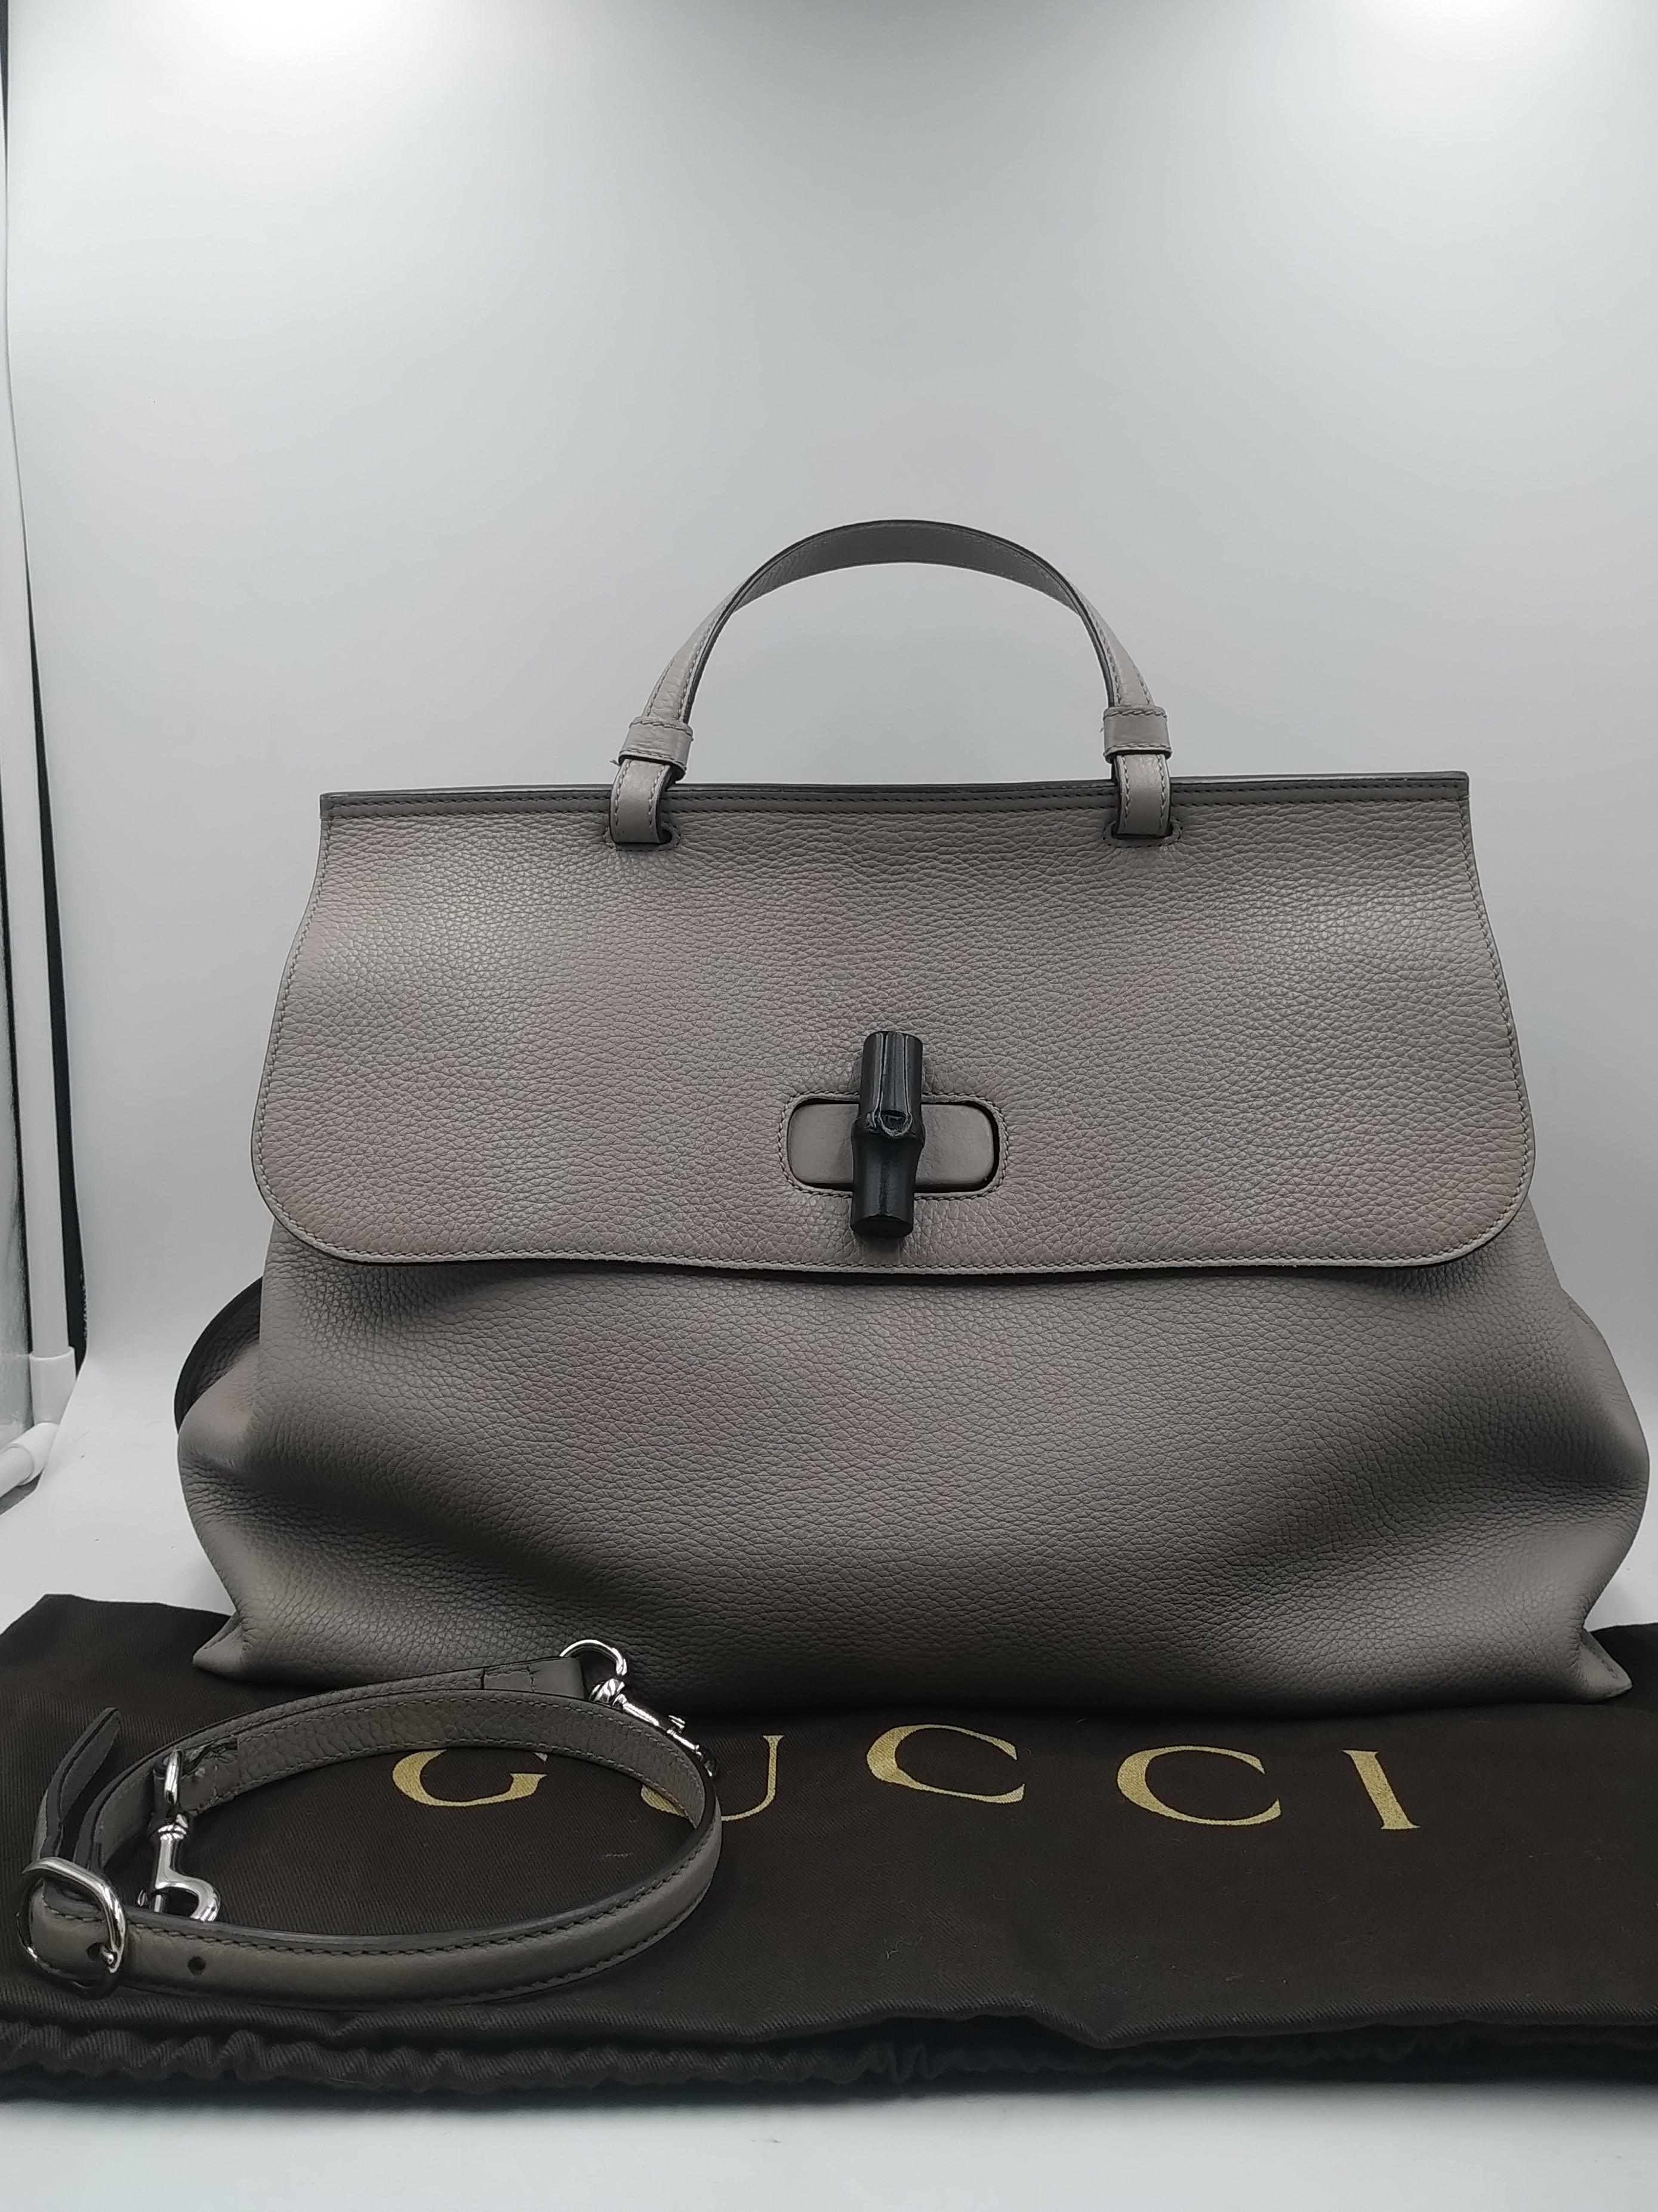 Gucci Bamboo Gray Daily Top Handle Shoulder Bag Large 10